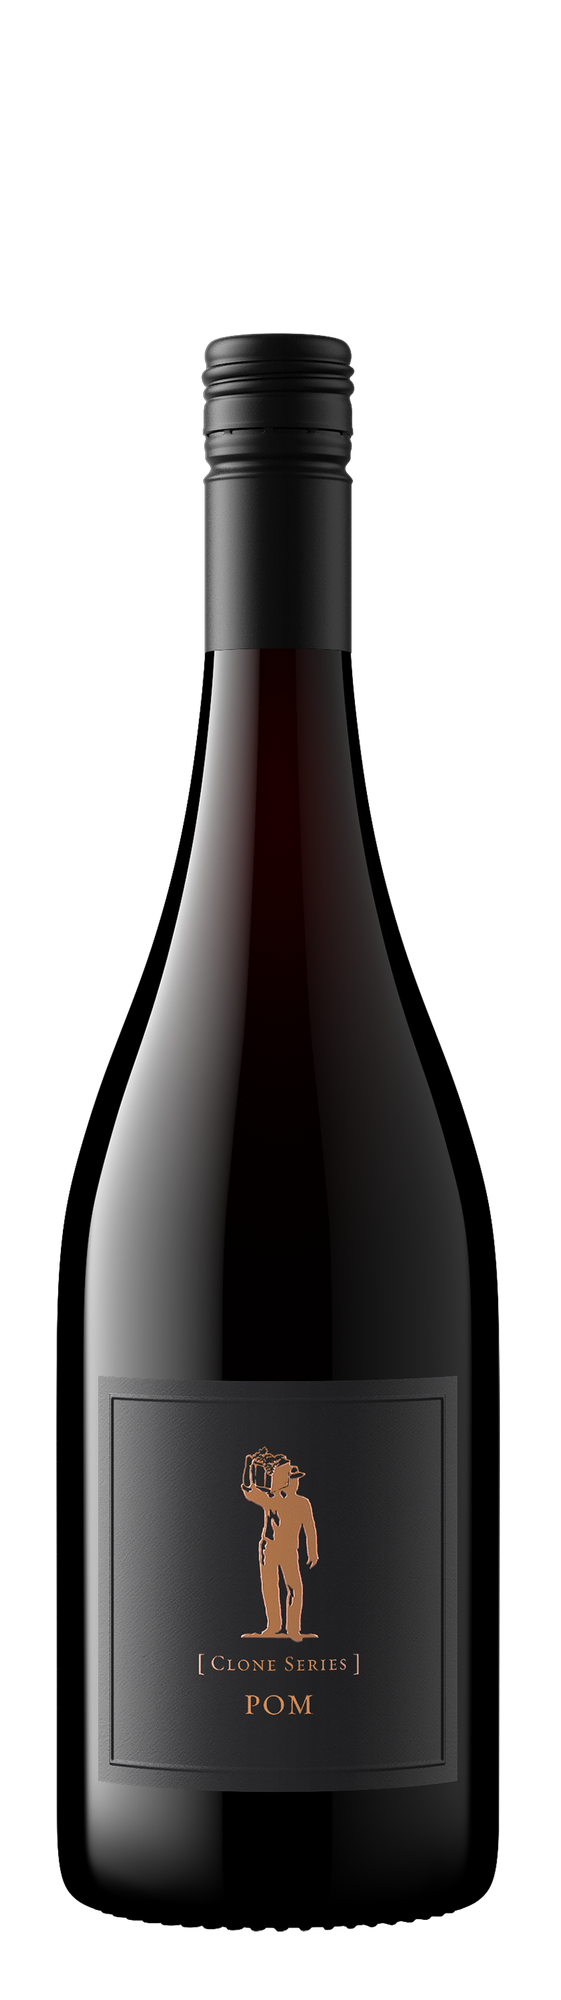 2018 Pinot Noir Clone POM Reserve